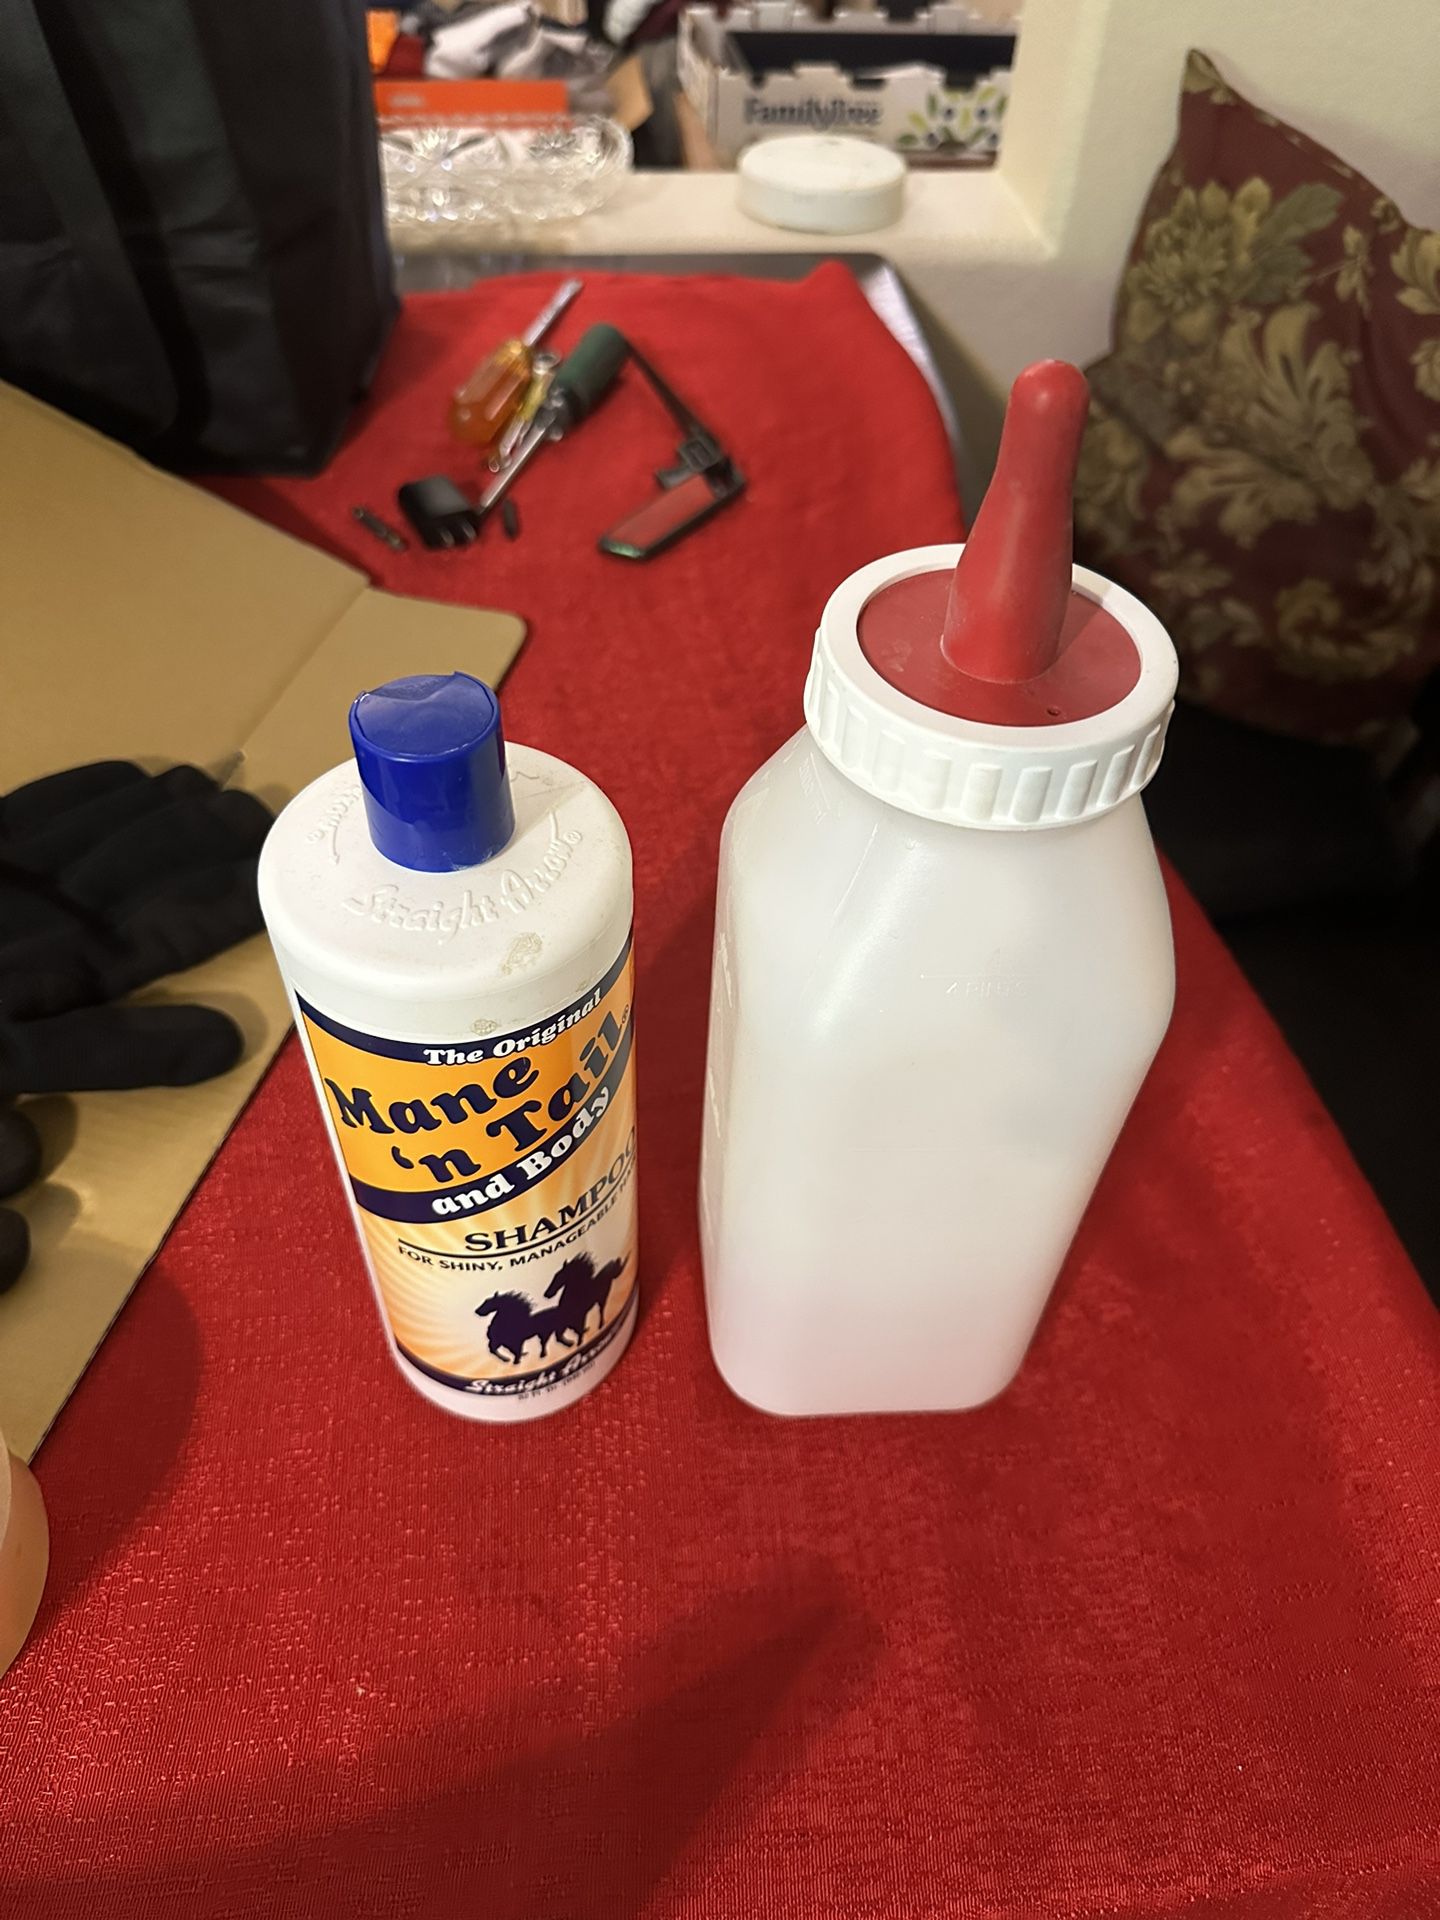 Milk Feeding Bottle & Mane ‘n Tail Shampoo